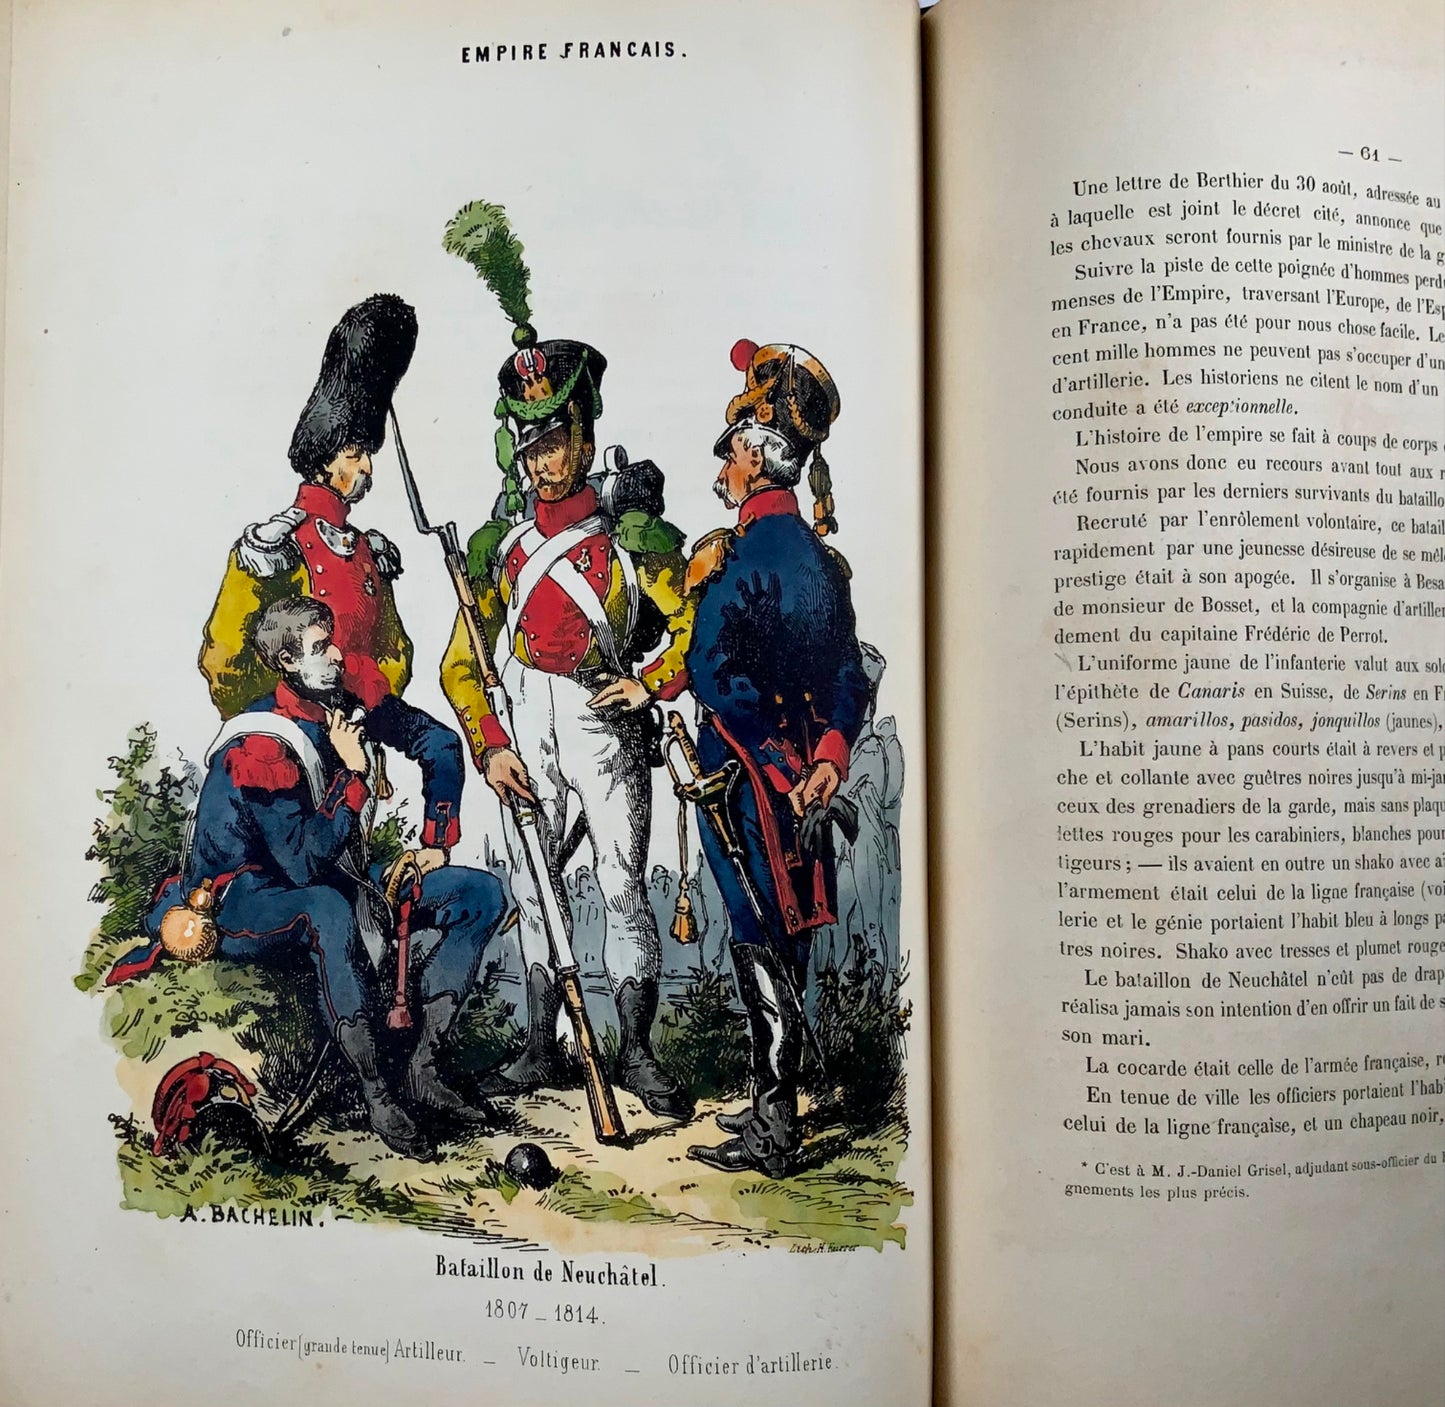 1831 Fate of principality of Neuchatel, Switzerland. Earl Roseberry’s copy. Ex libris.